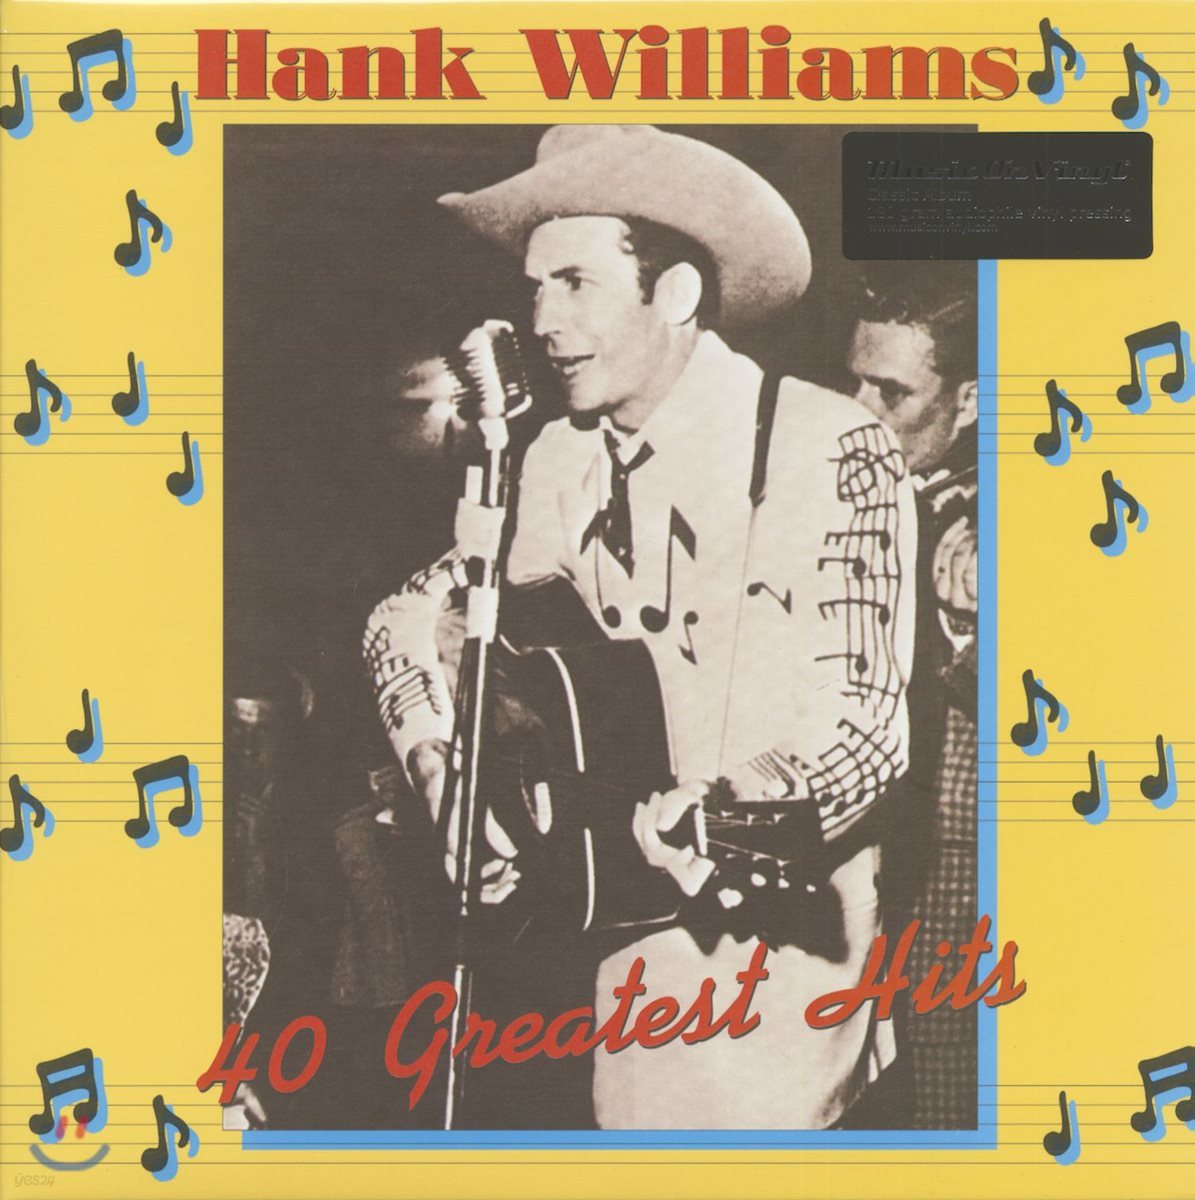 Hank Williams - 40 Greatest Hits [2LP]